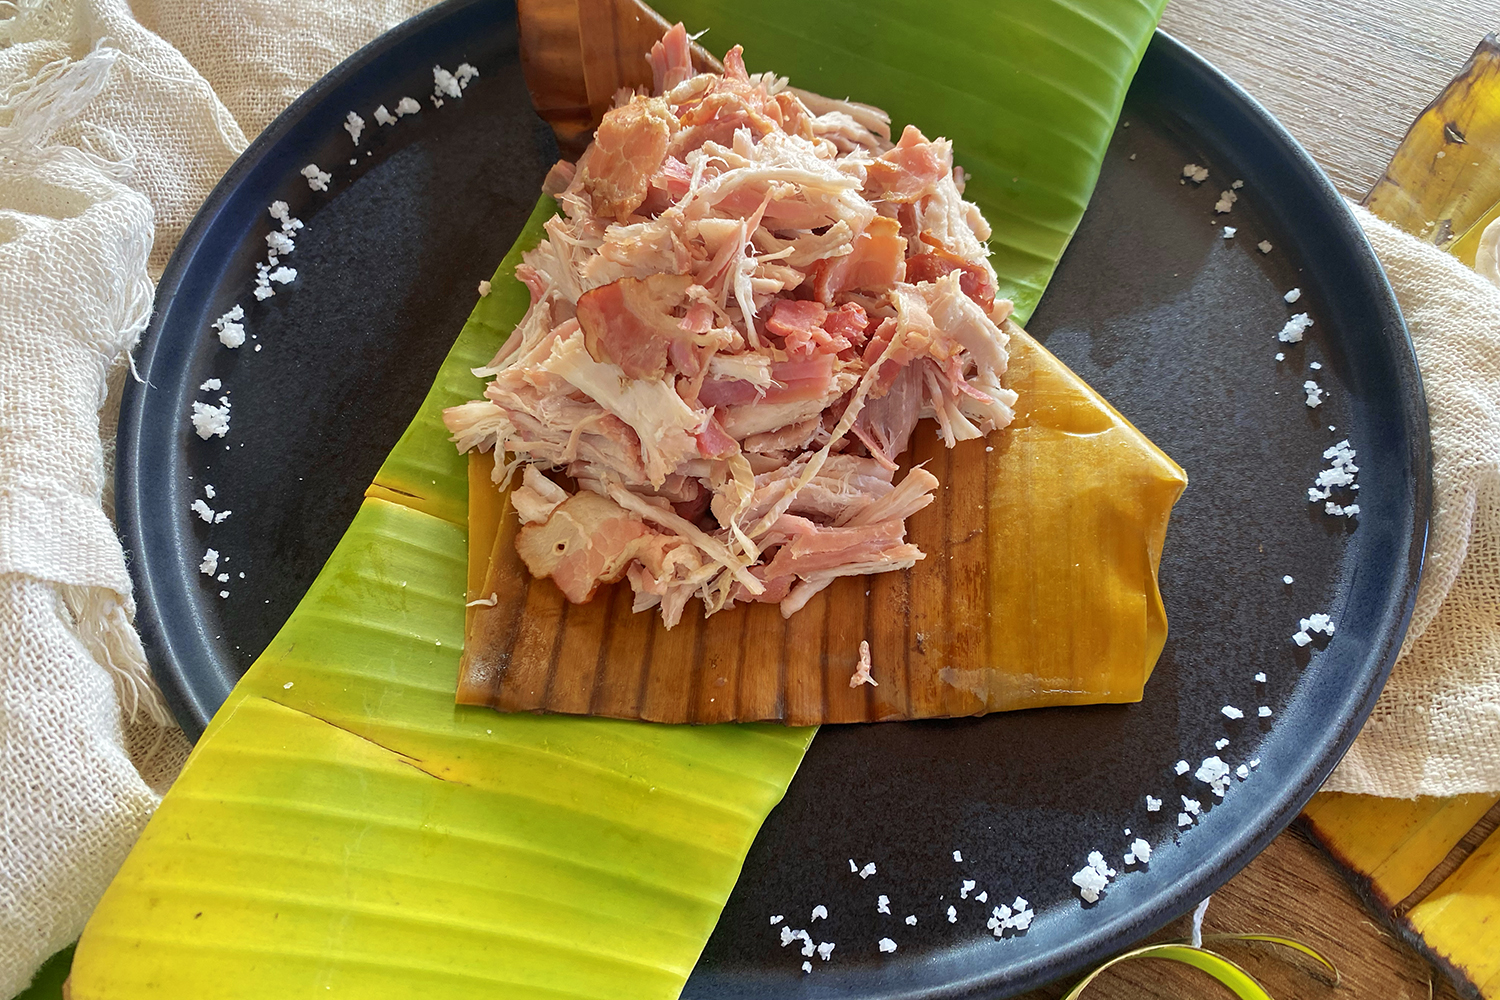 Kalua Pork mixed with bacon on banana leaf on black plate